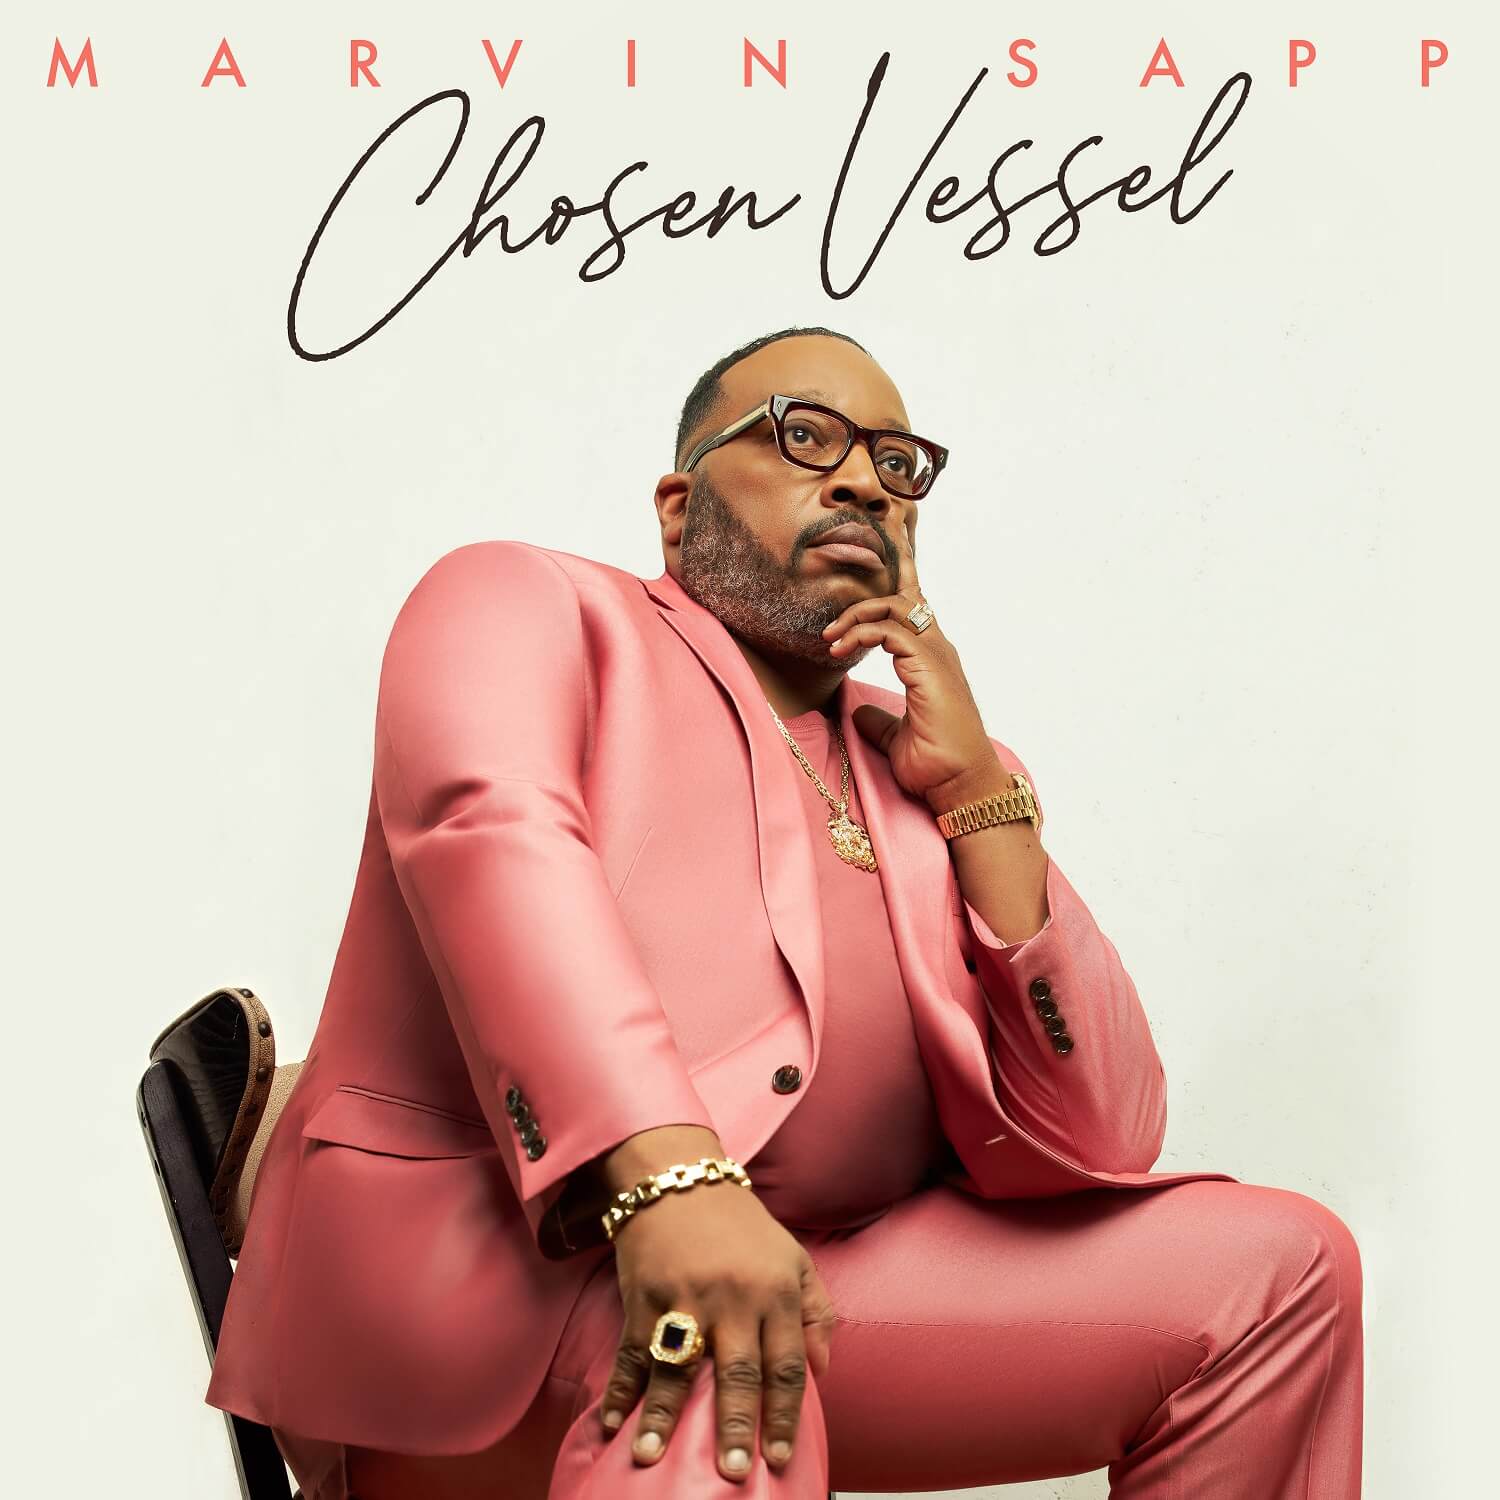 Marvin Sapp Chosen Vessel album cover 1 » MARVIN SAPP’s